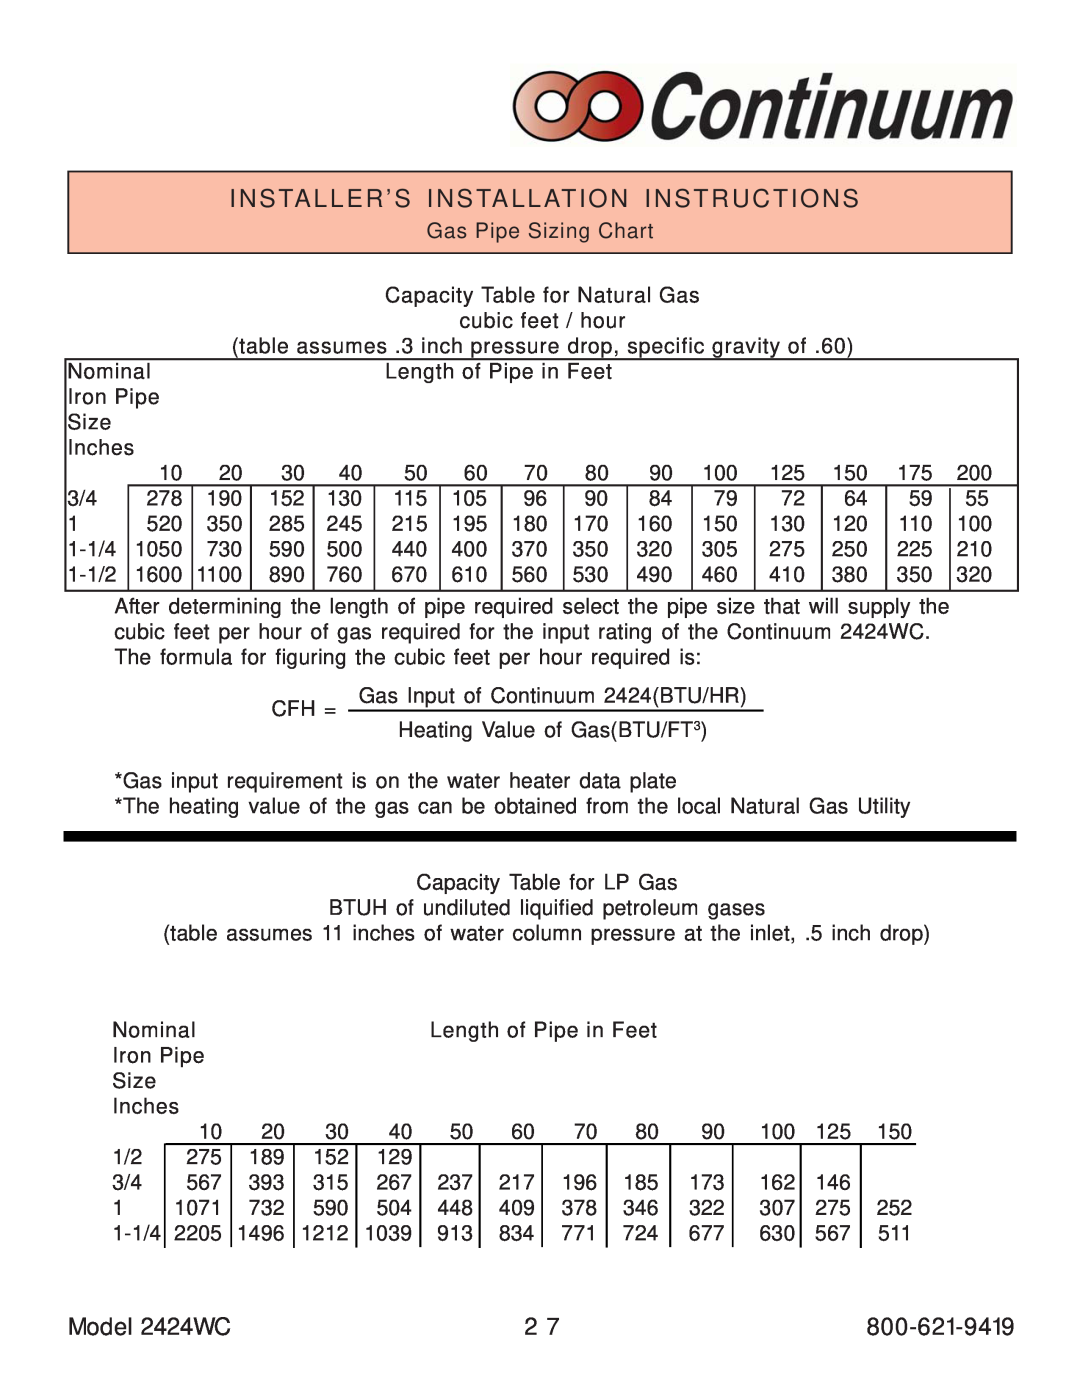 Rinnai manual Model 2424WC, Gas Pipe Sizing Chart 